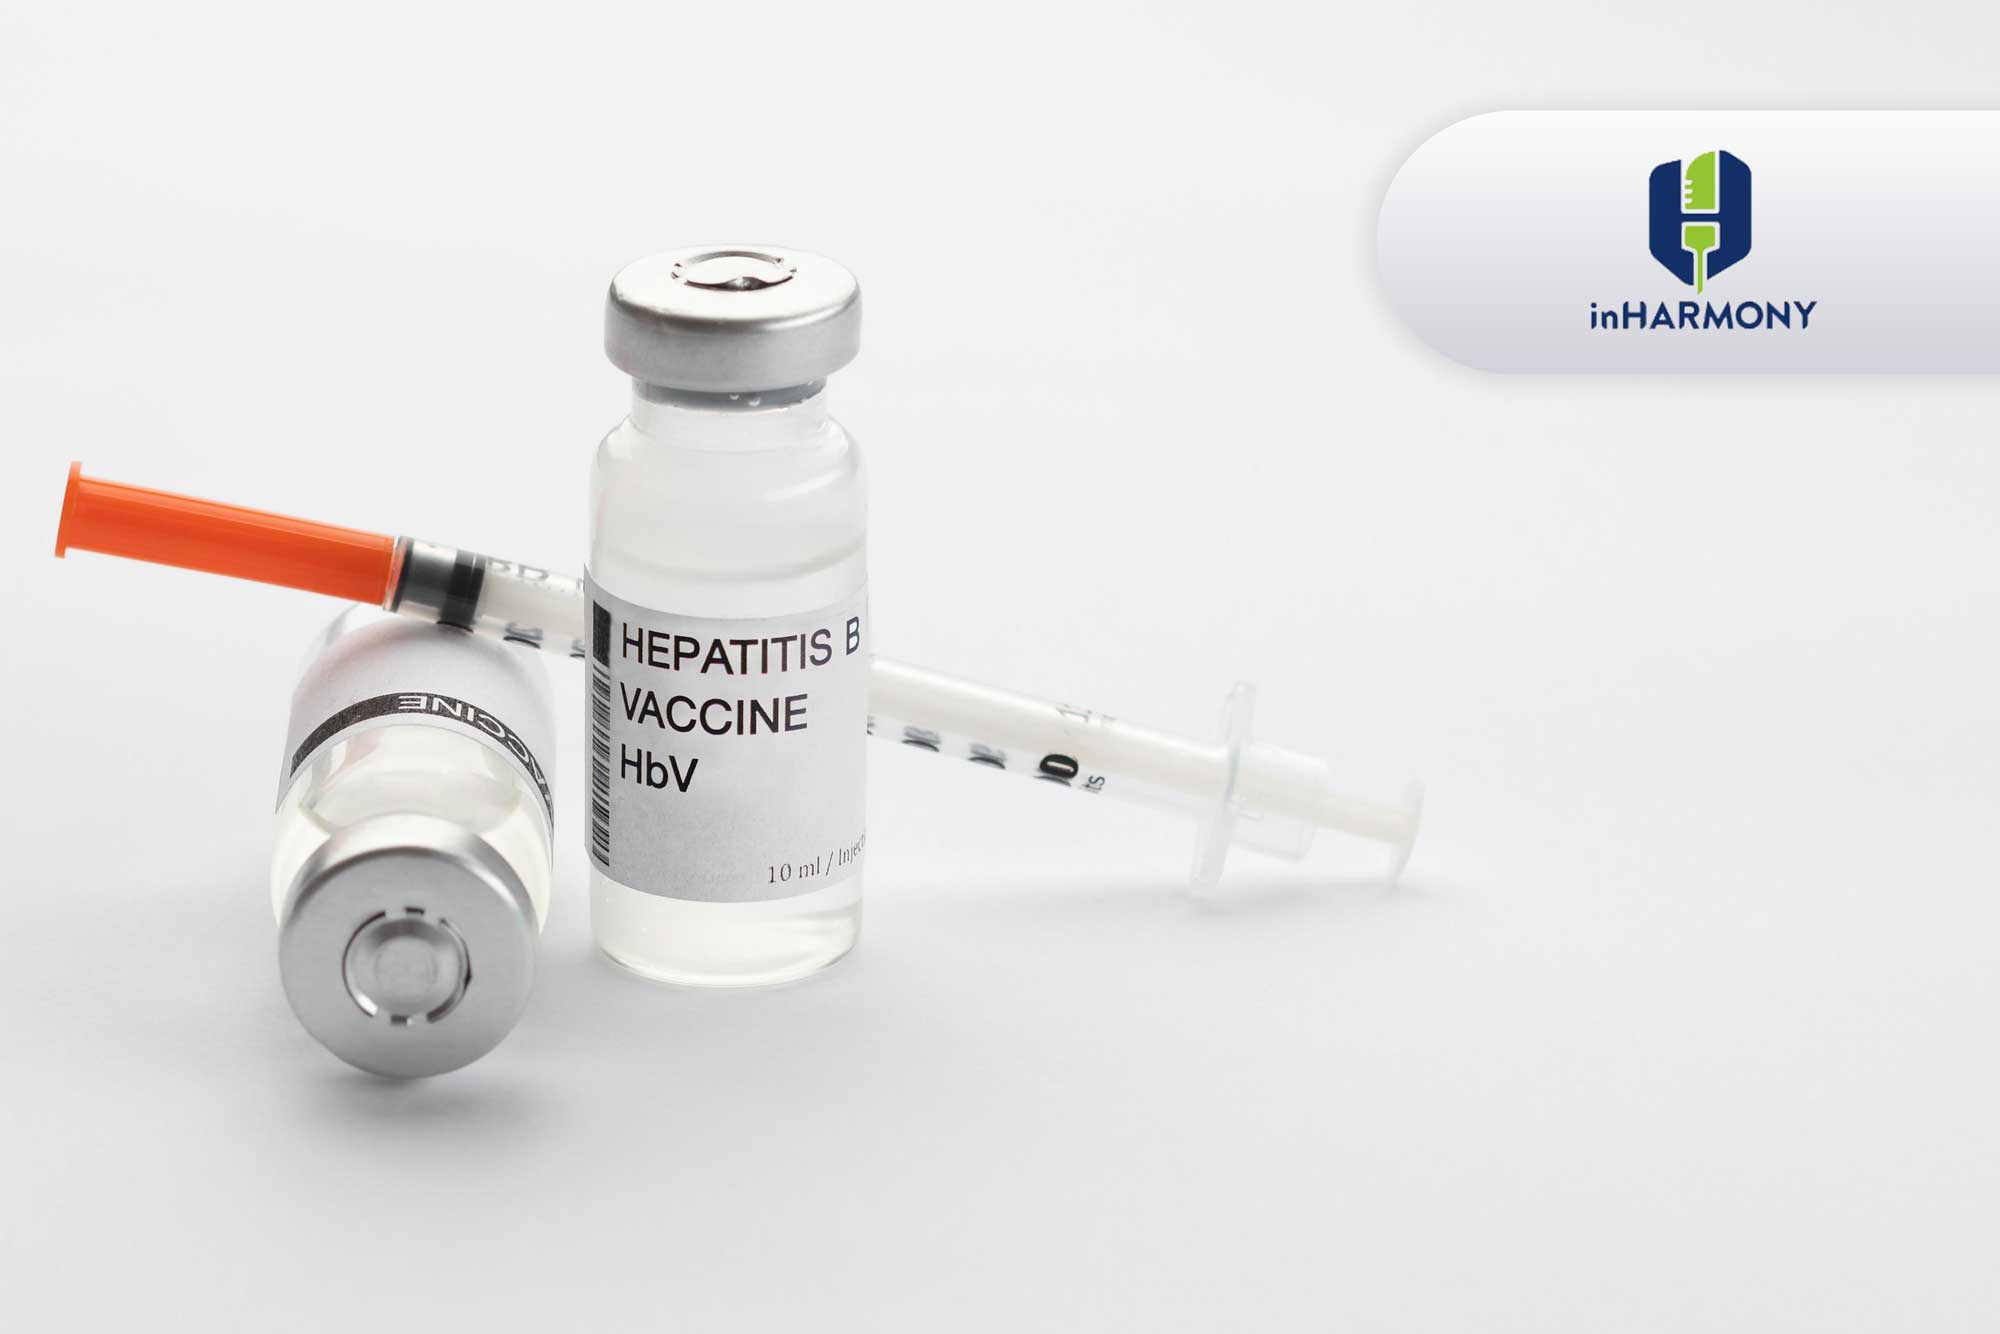 vaksin-hepatitis-B-inharmony_1691391833.jpg